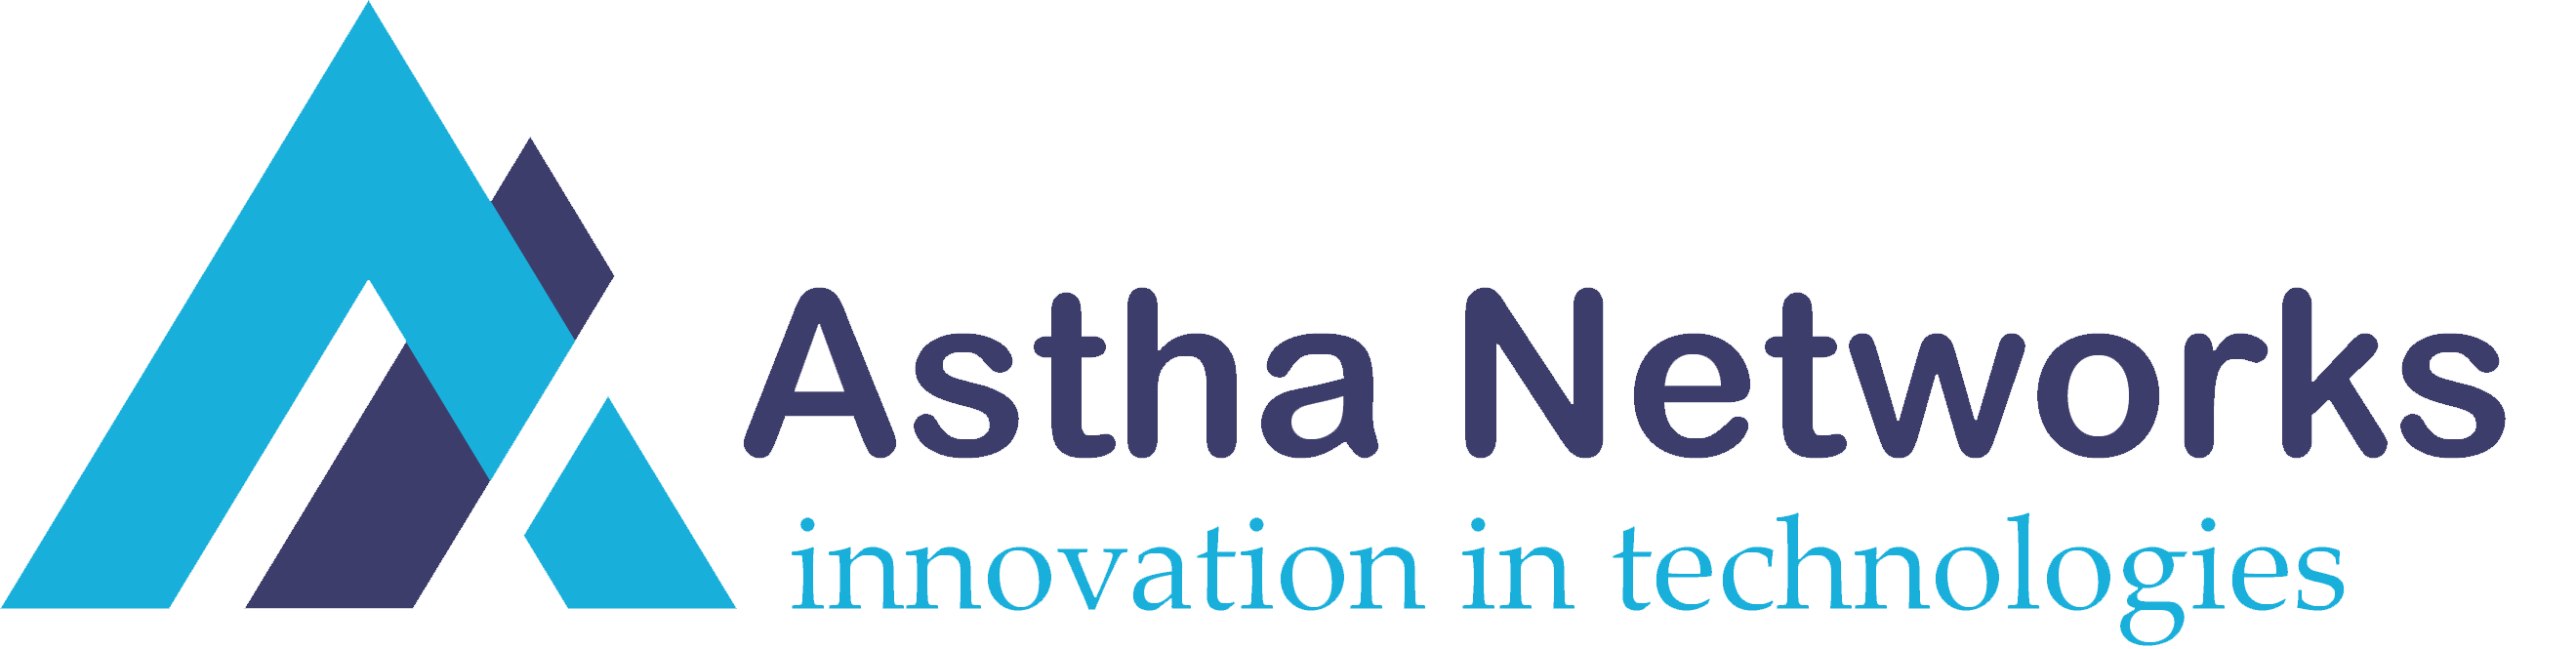 Astha Networks-logo